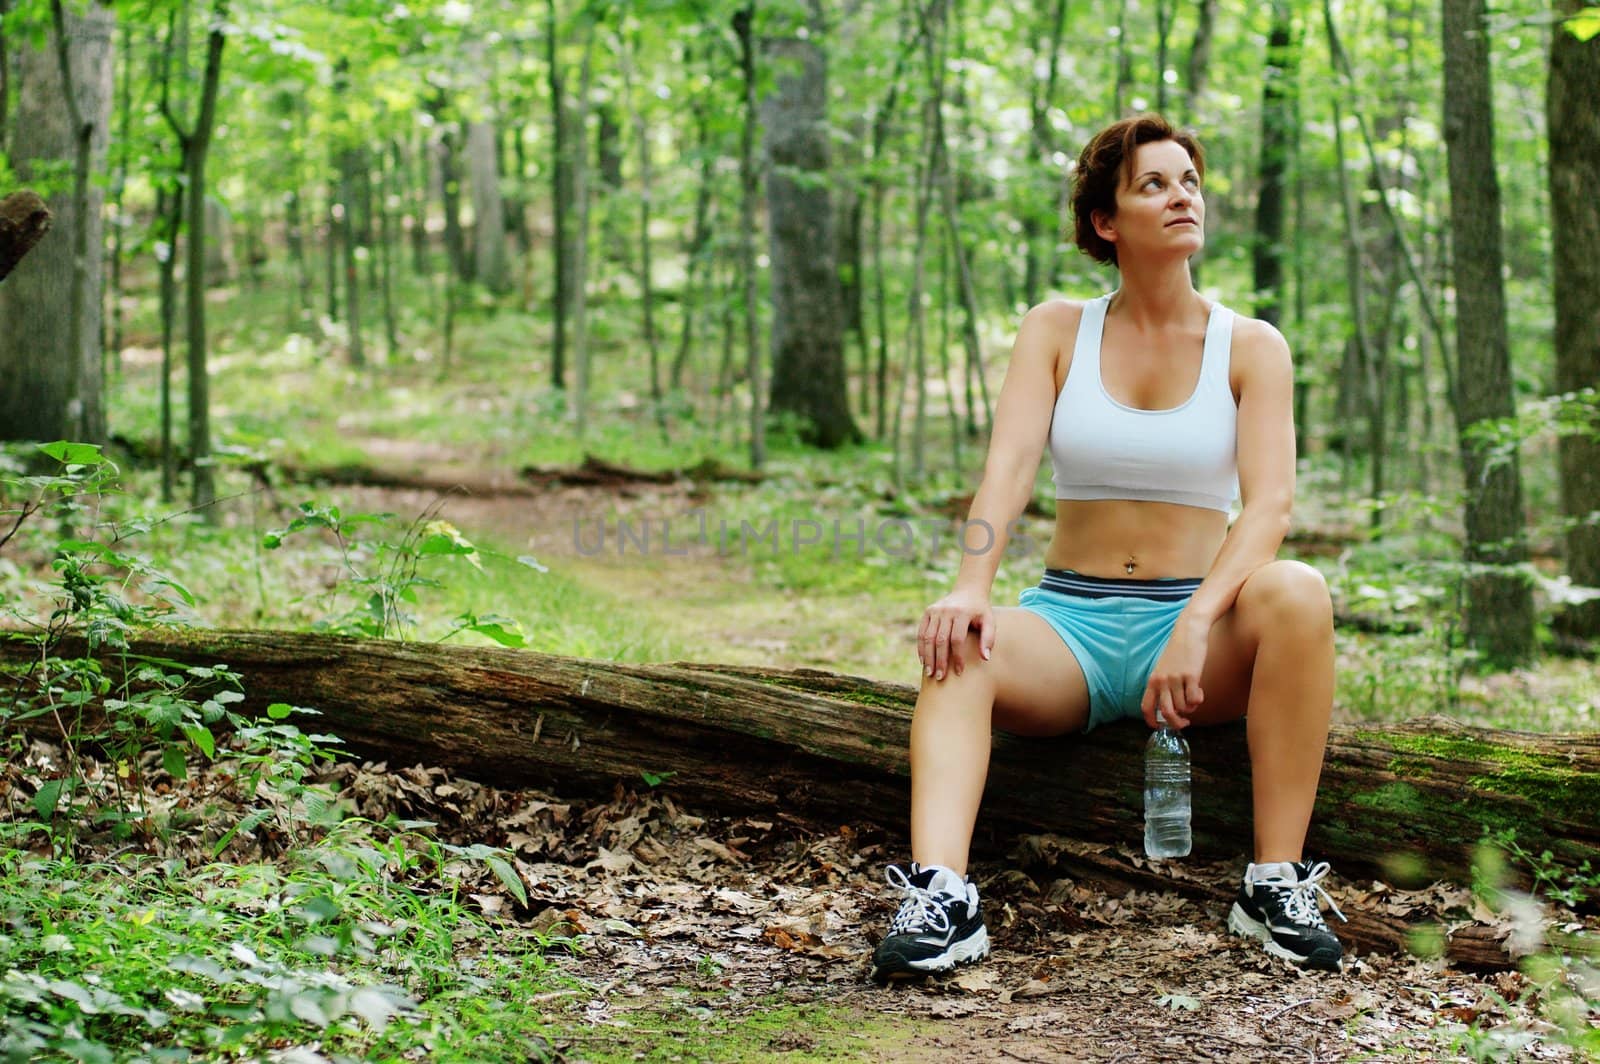 Mature woman runner resting in woods.